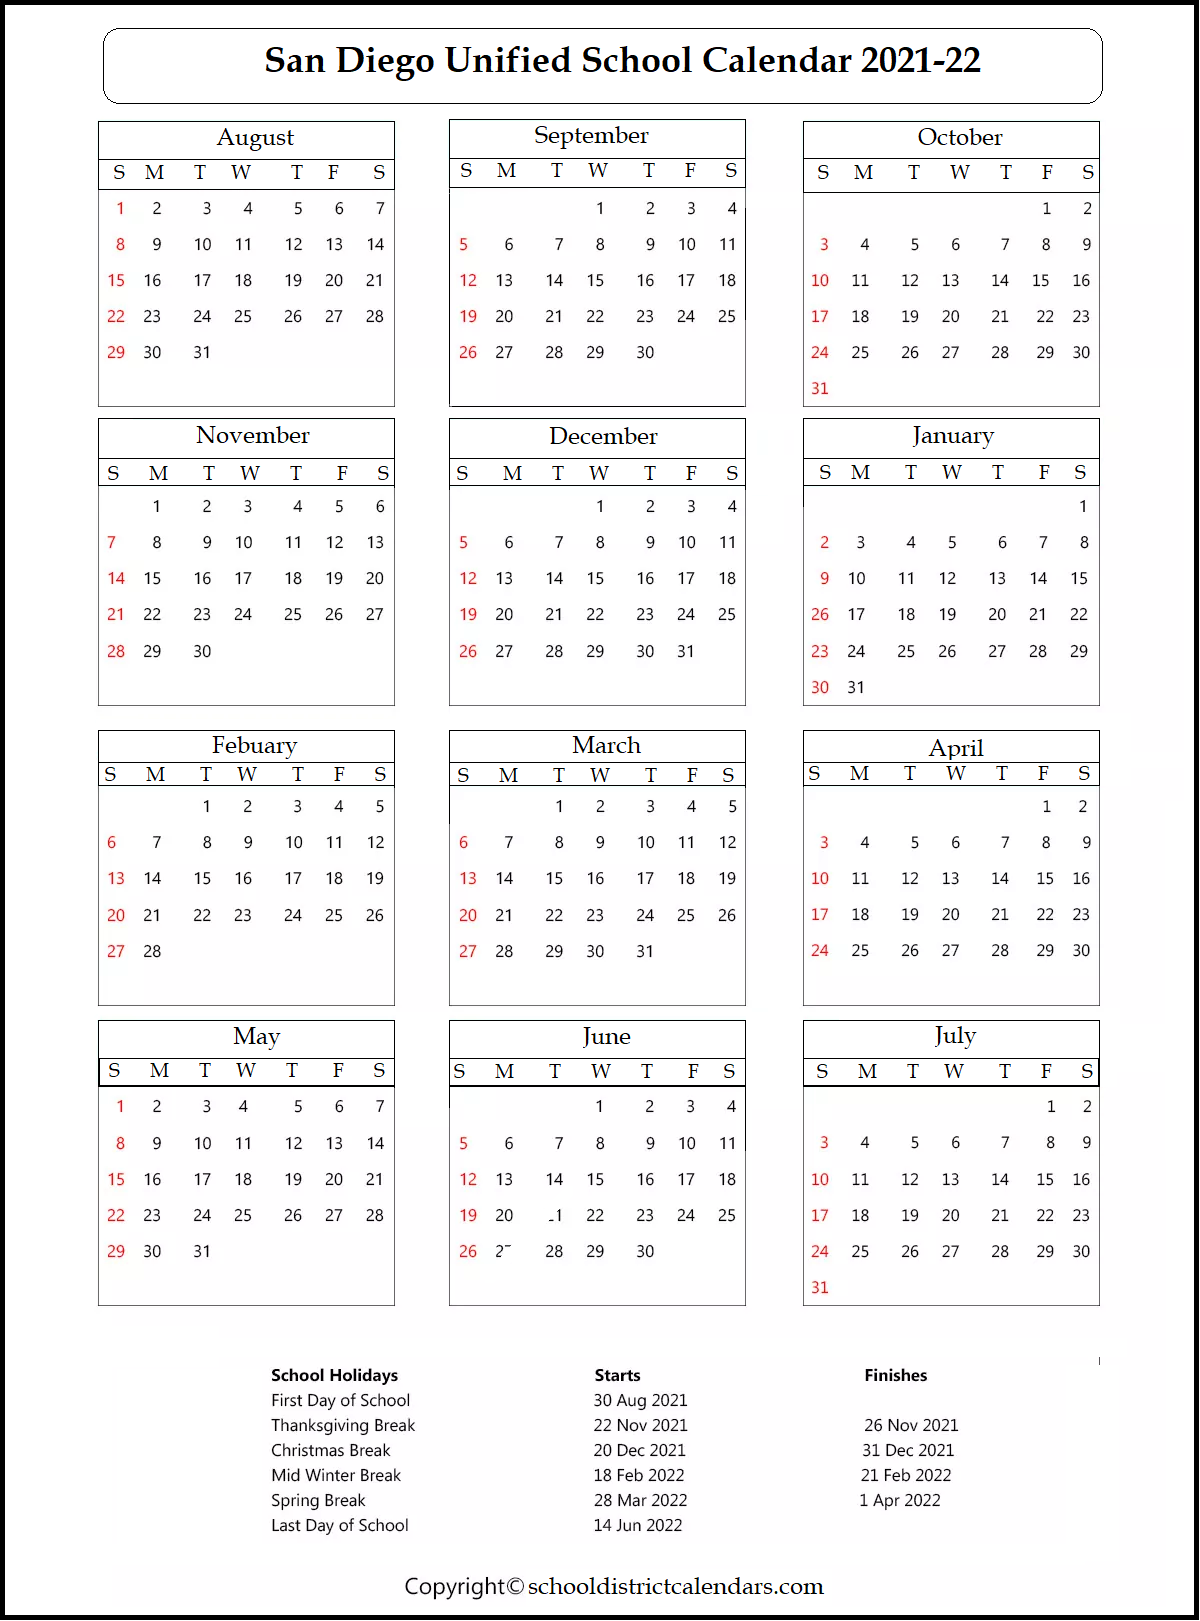 San Diego Unified School District Calendar